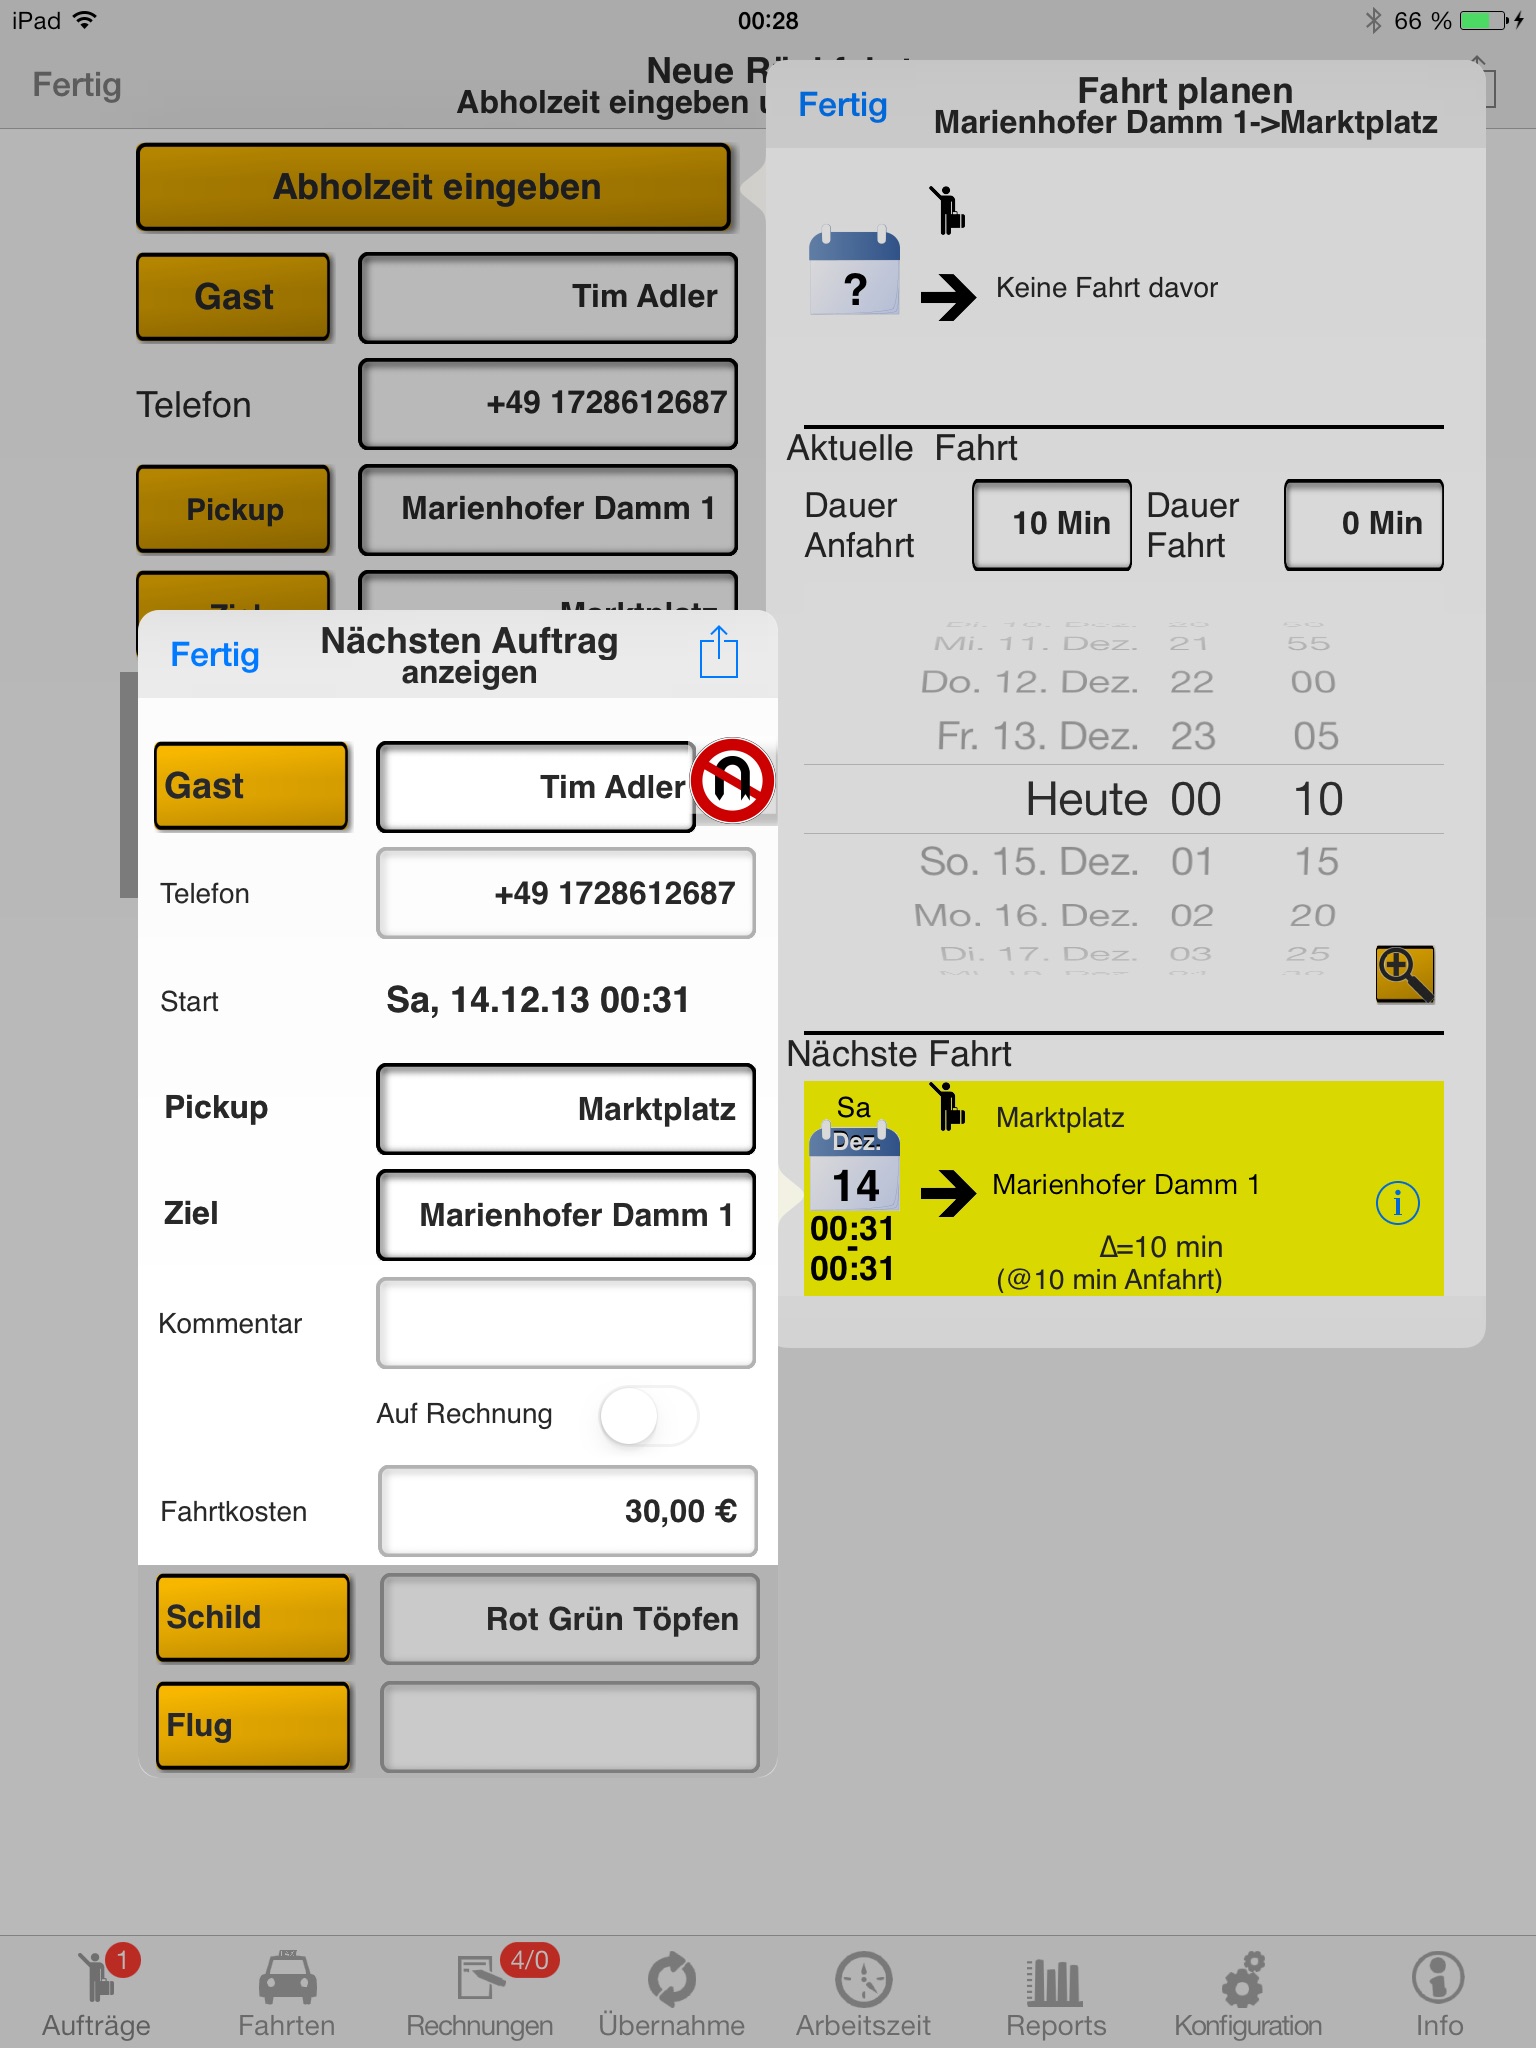 Taxi Data Manager - Driver App screenshot 3